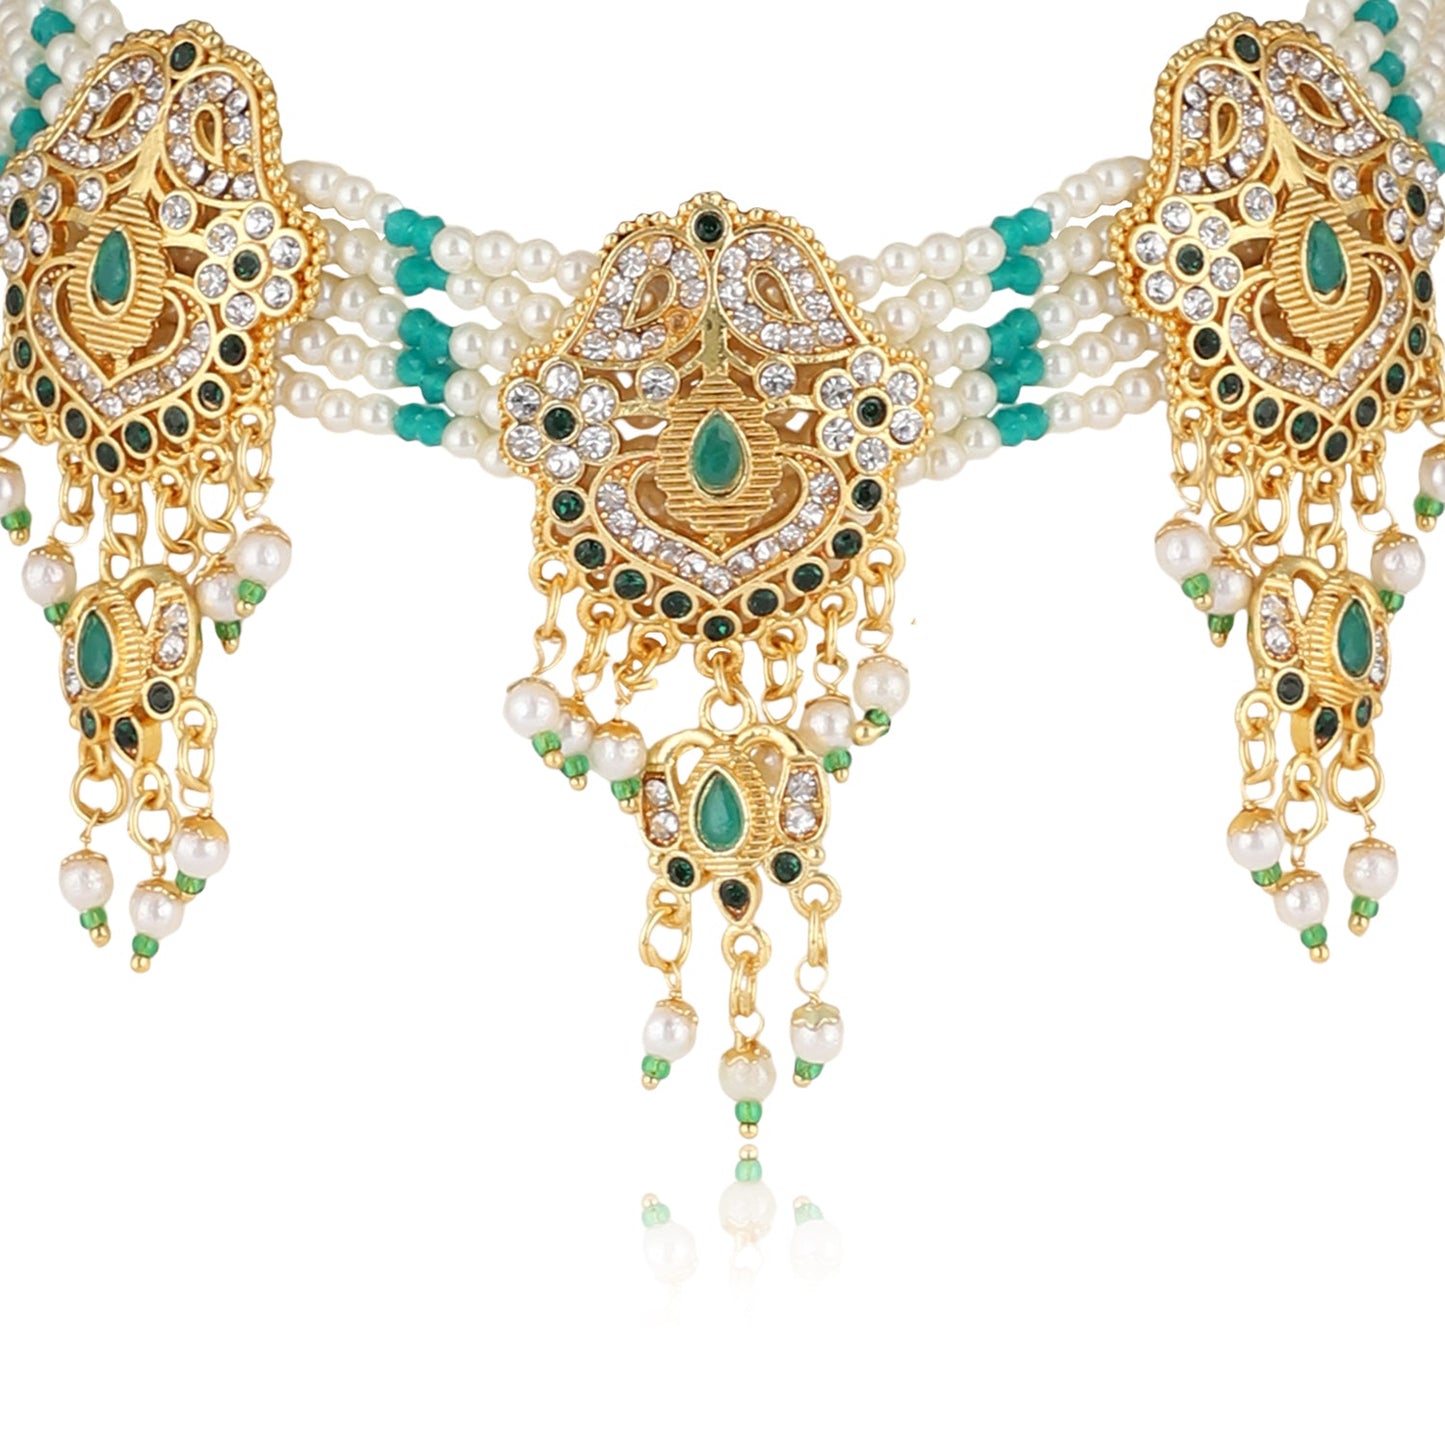 Mekkna Women's Pride Necklace with Earrings |  Buy This Jewellery Online from Mekkna